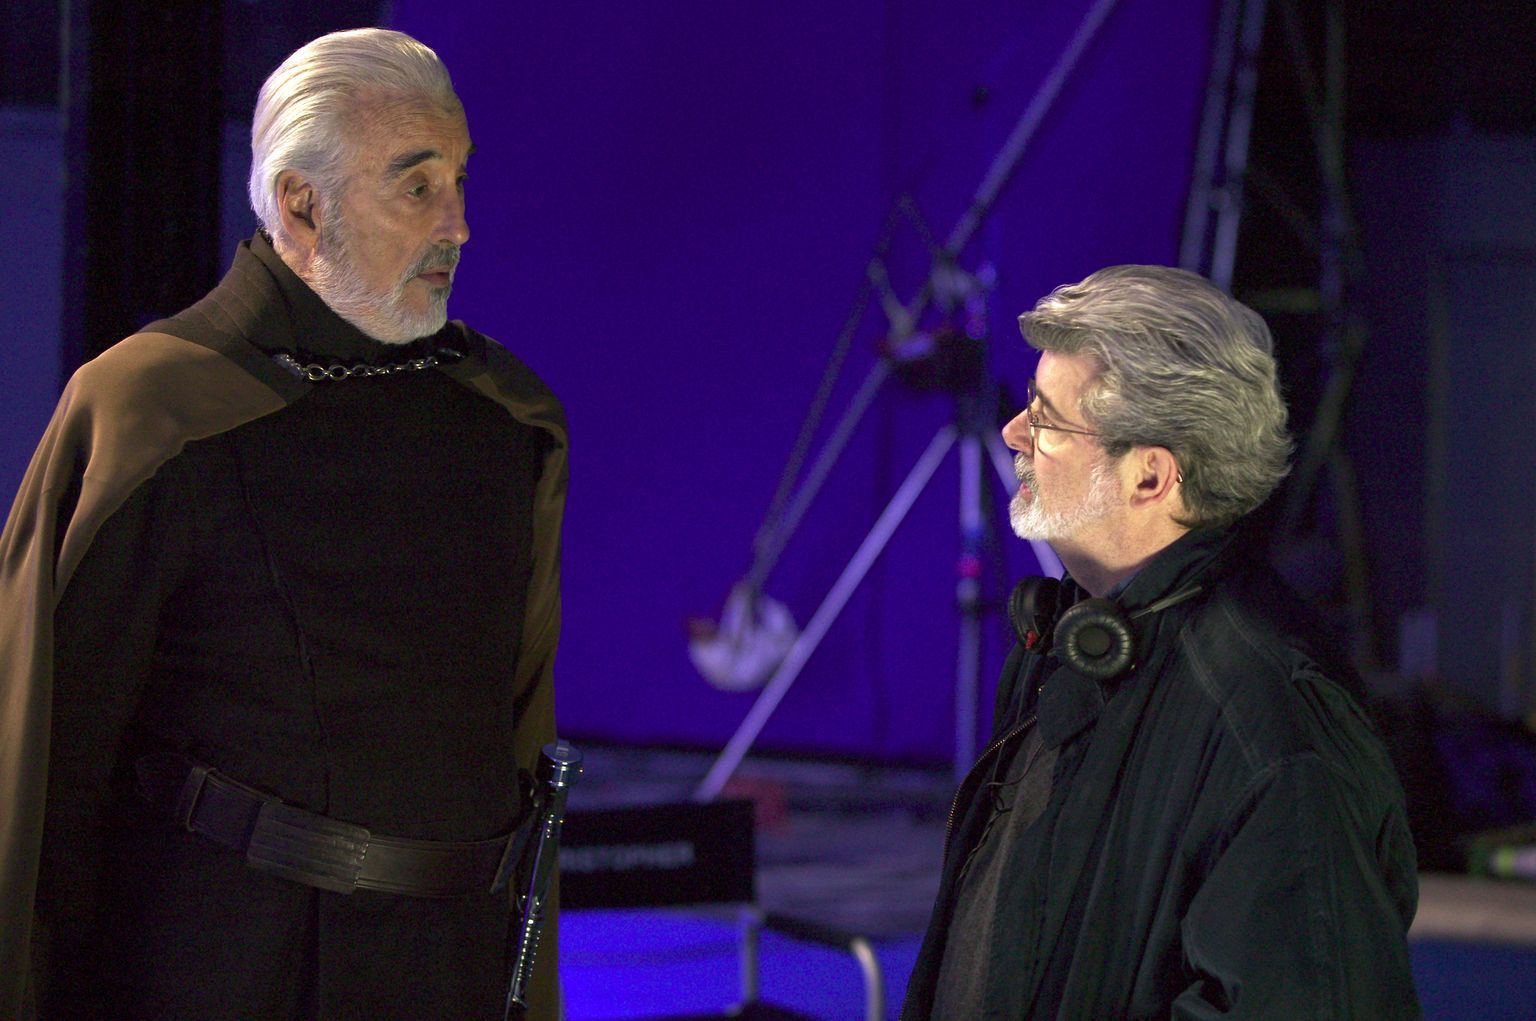 George Lucas and Christopher Lee in Zvaigzdziu karai. Situ kerstas (2005)